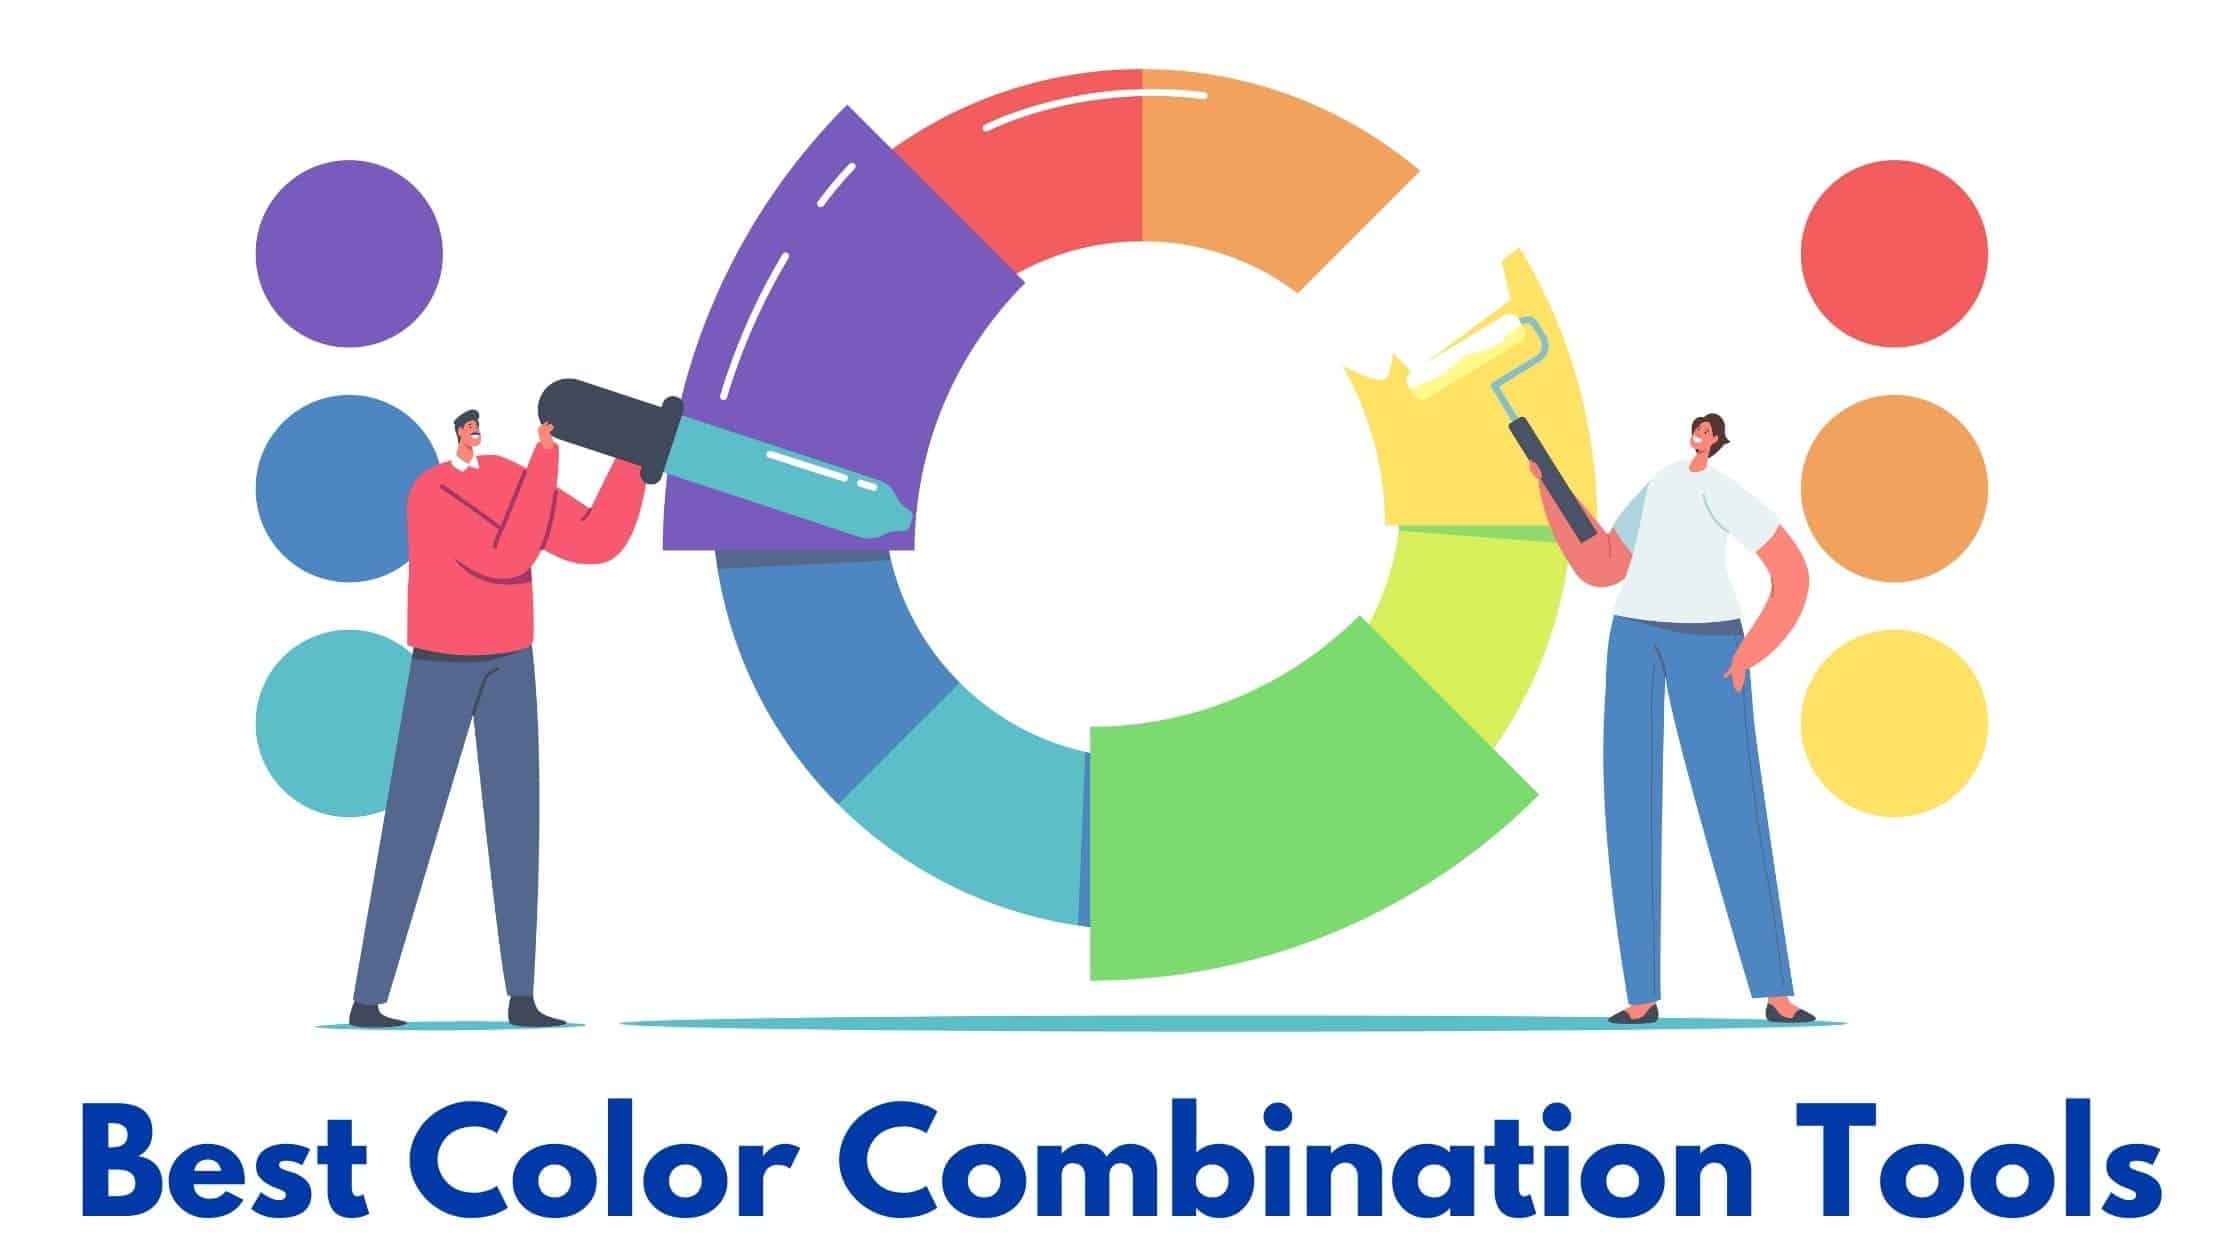 7 Best Free Color Palette Generator Tools Online